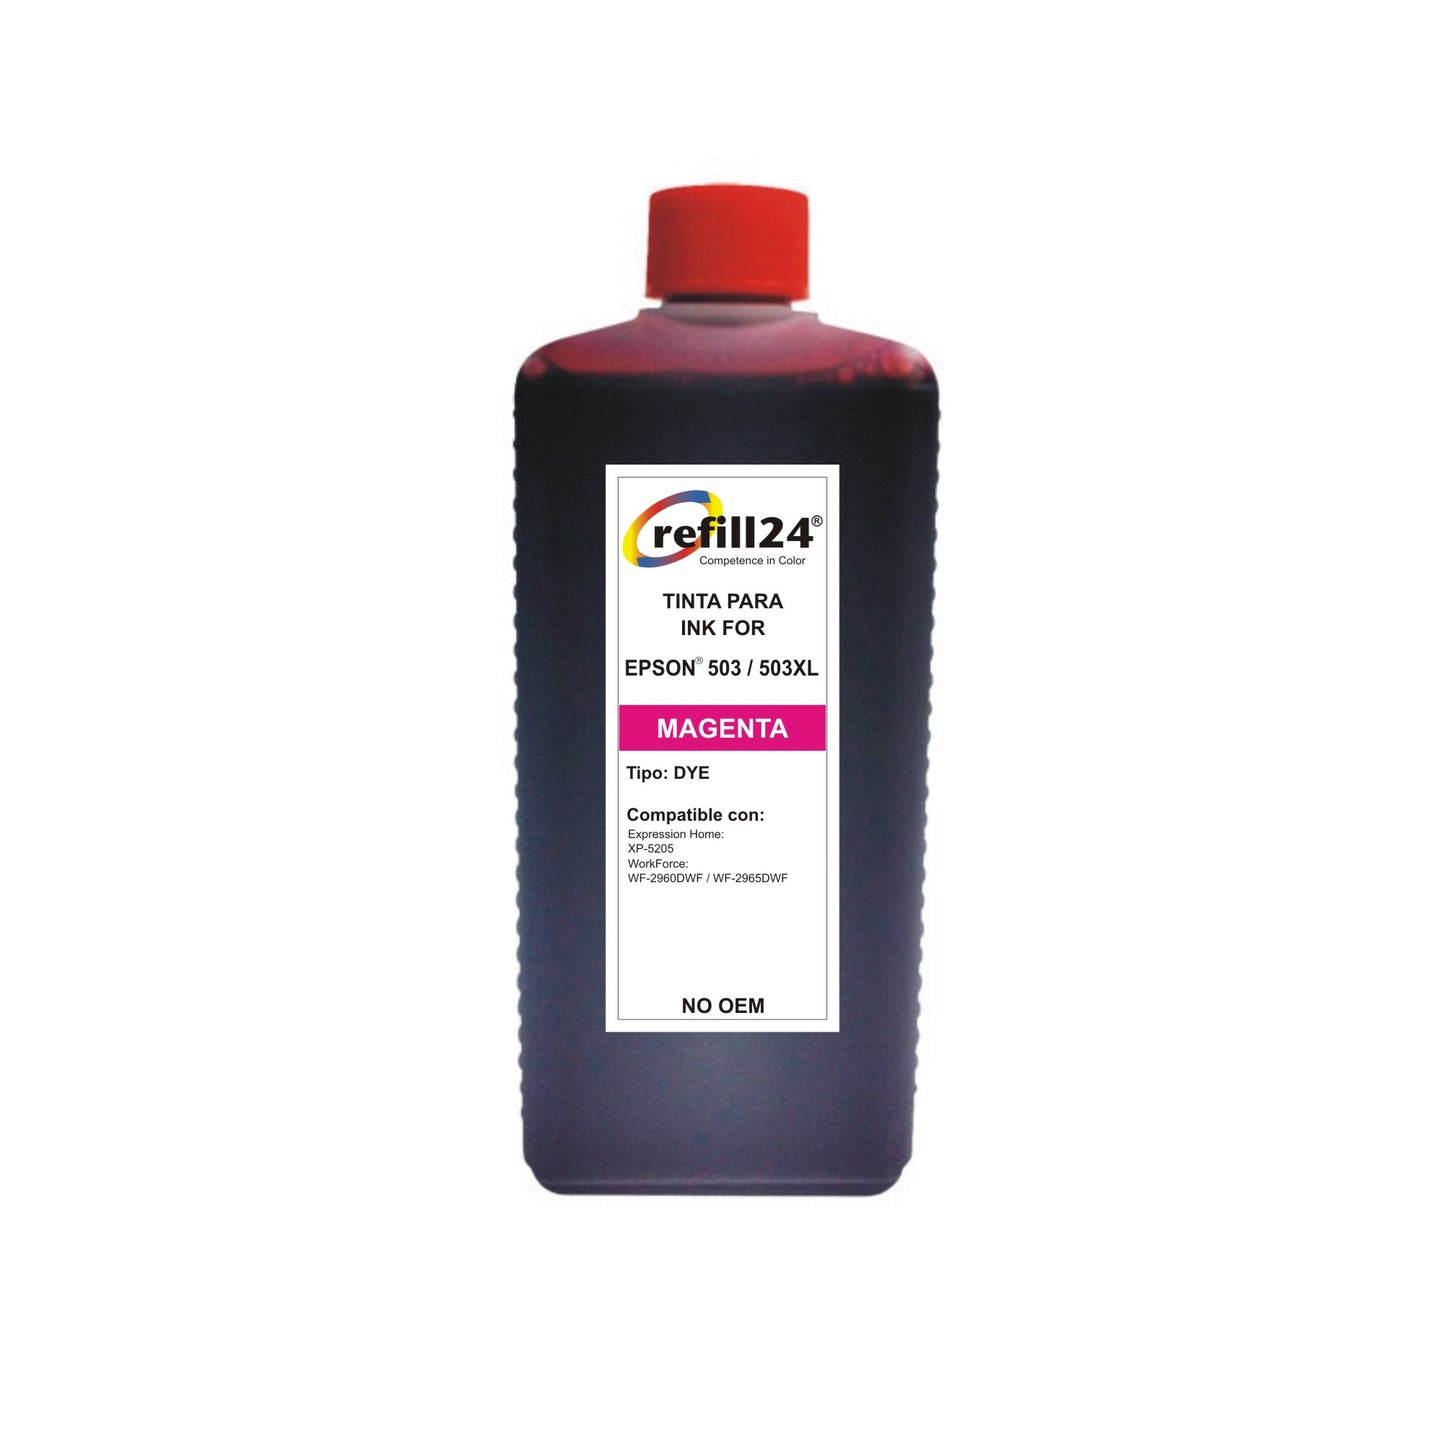 Tinta Premium Refill 24® para cartuchos Epson 503/503XL